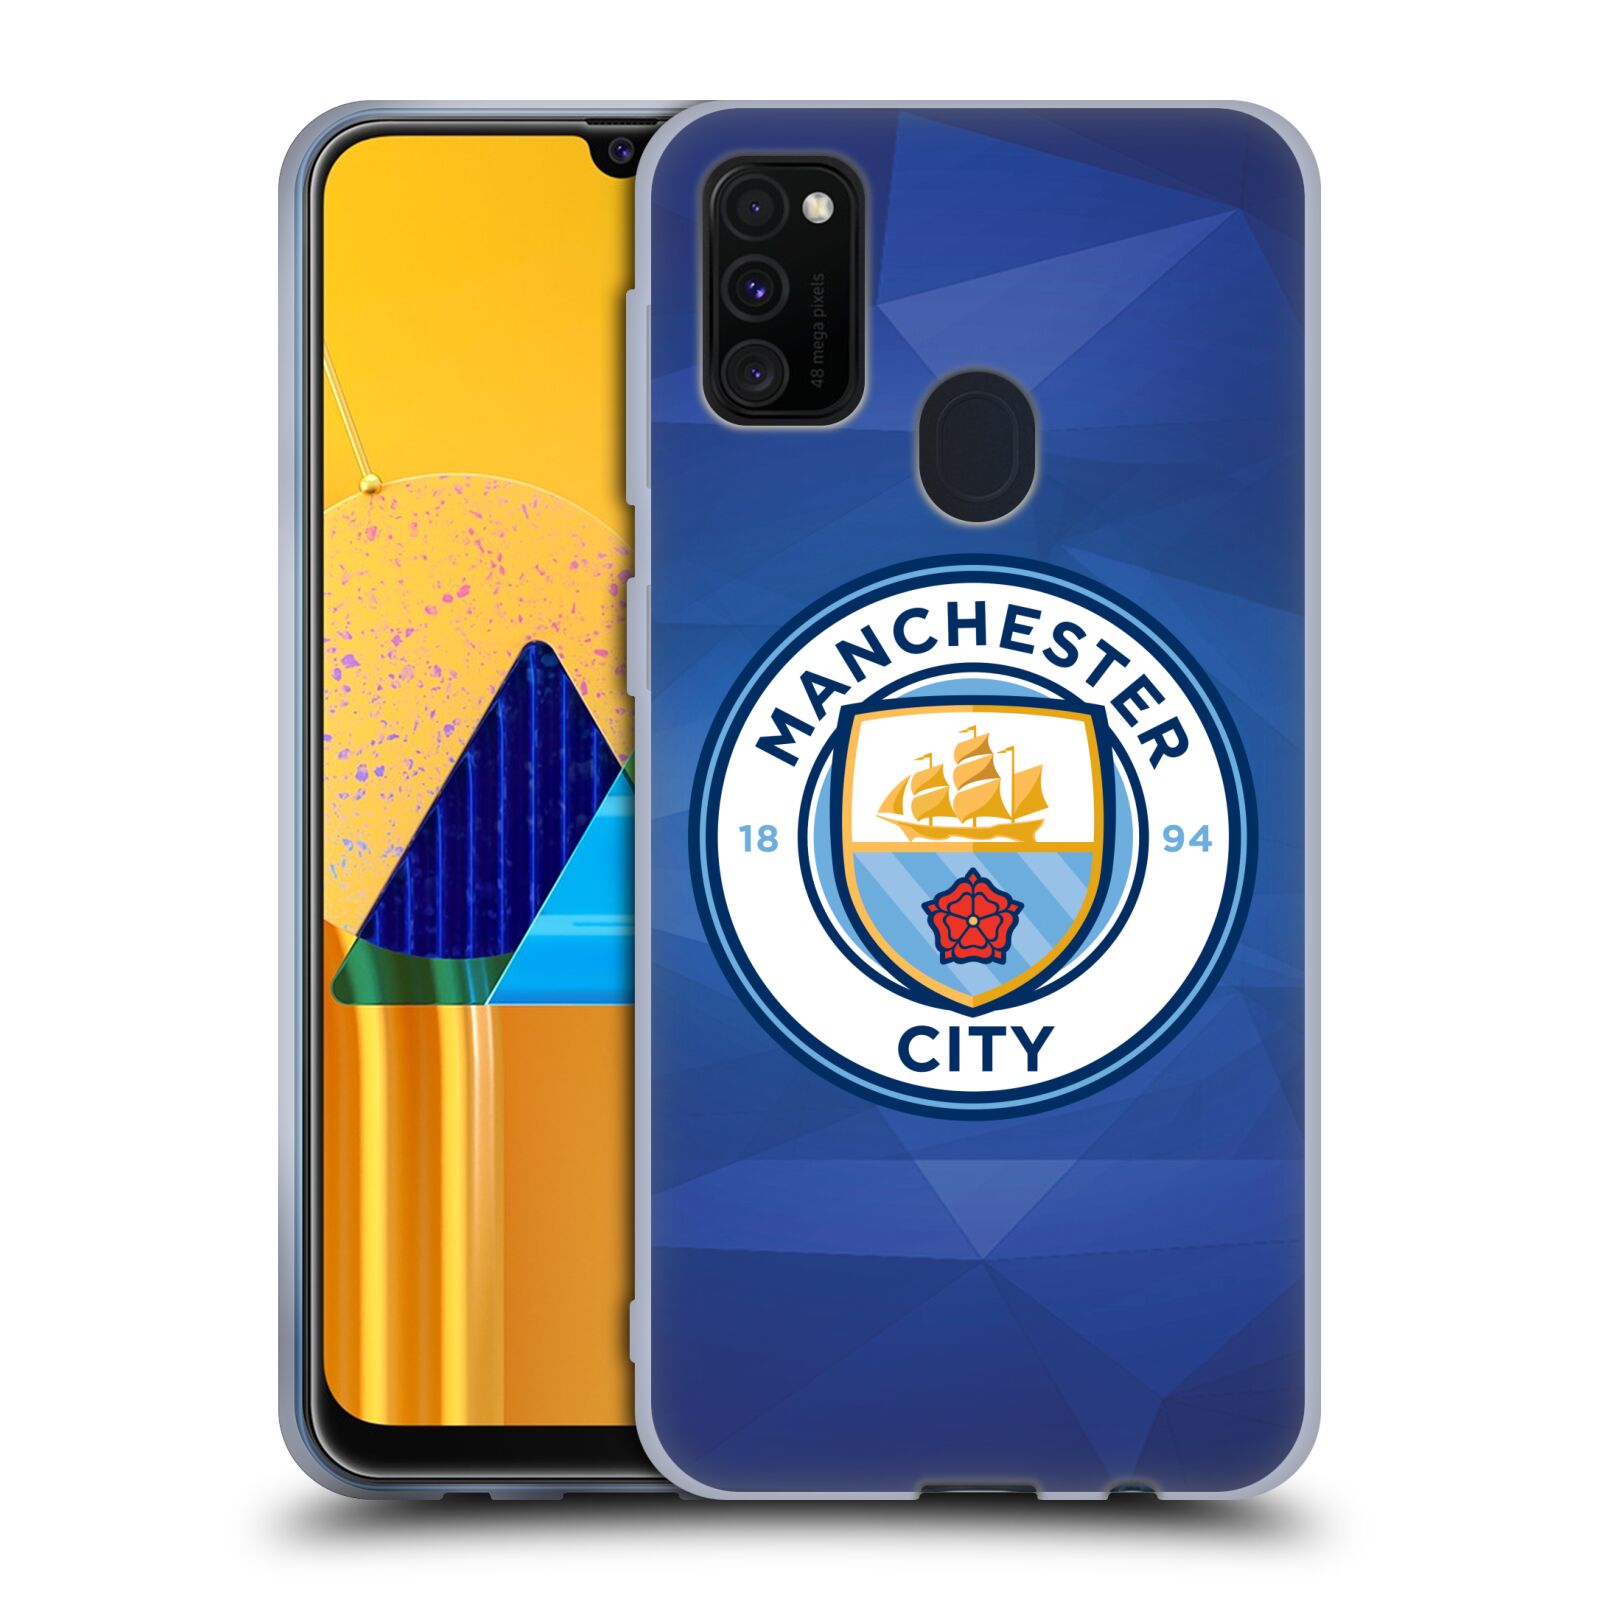 Silikonové pouzdro na mobil Samsung Galaxy M21 - Head Case - Manchester City FC - Modré nové logo (Silikonový kryt, obal, pouzdro na mobilní telefon Samsung Galaxy M21 M215F Dual Sim s motivem Manchester City FC - Modré nové logo)